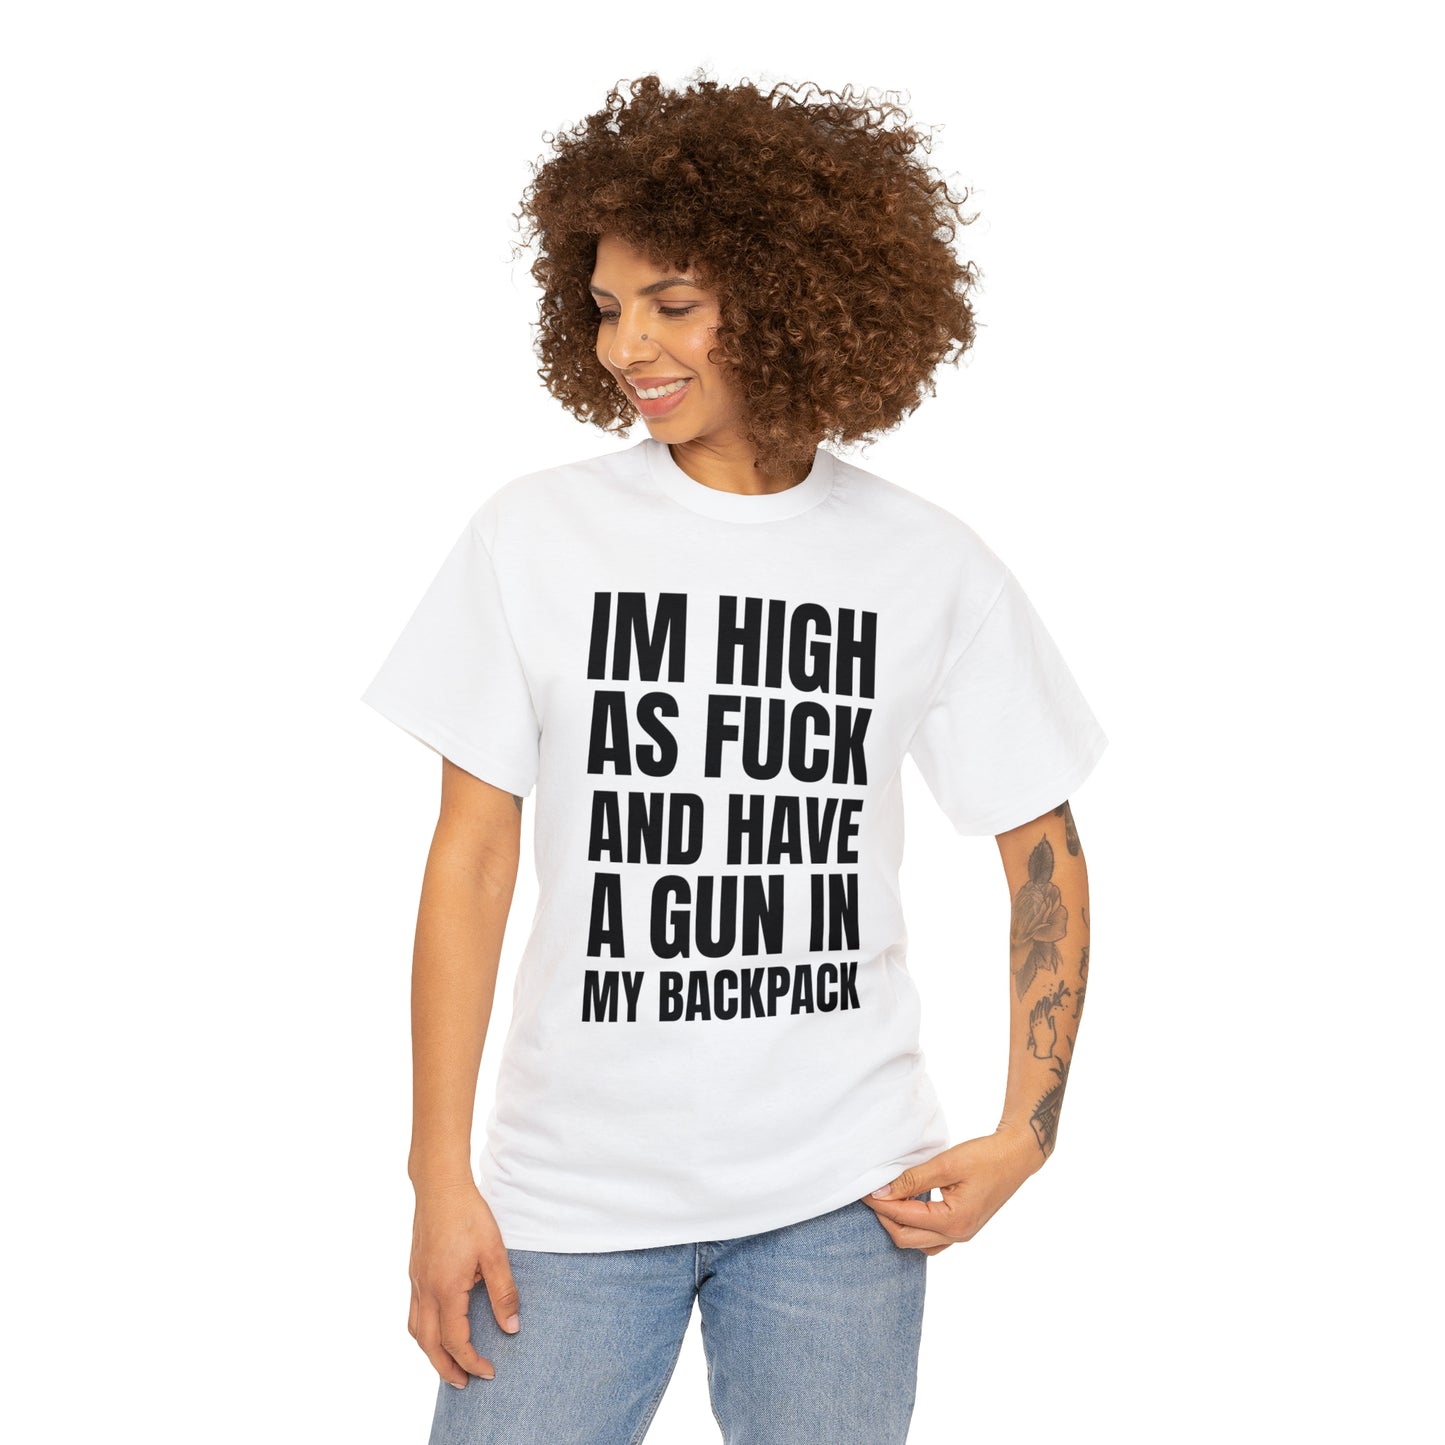 Im High and Have a Gun